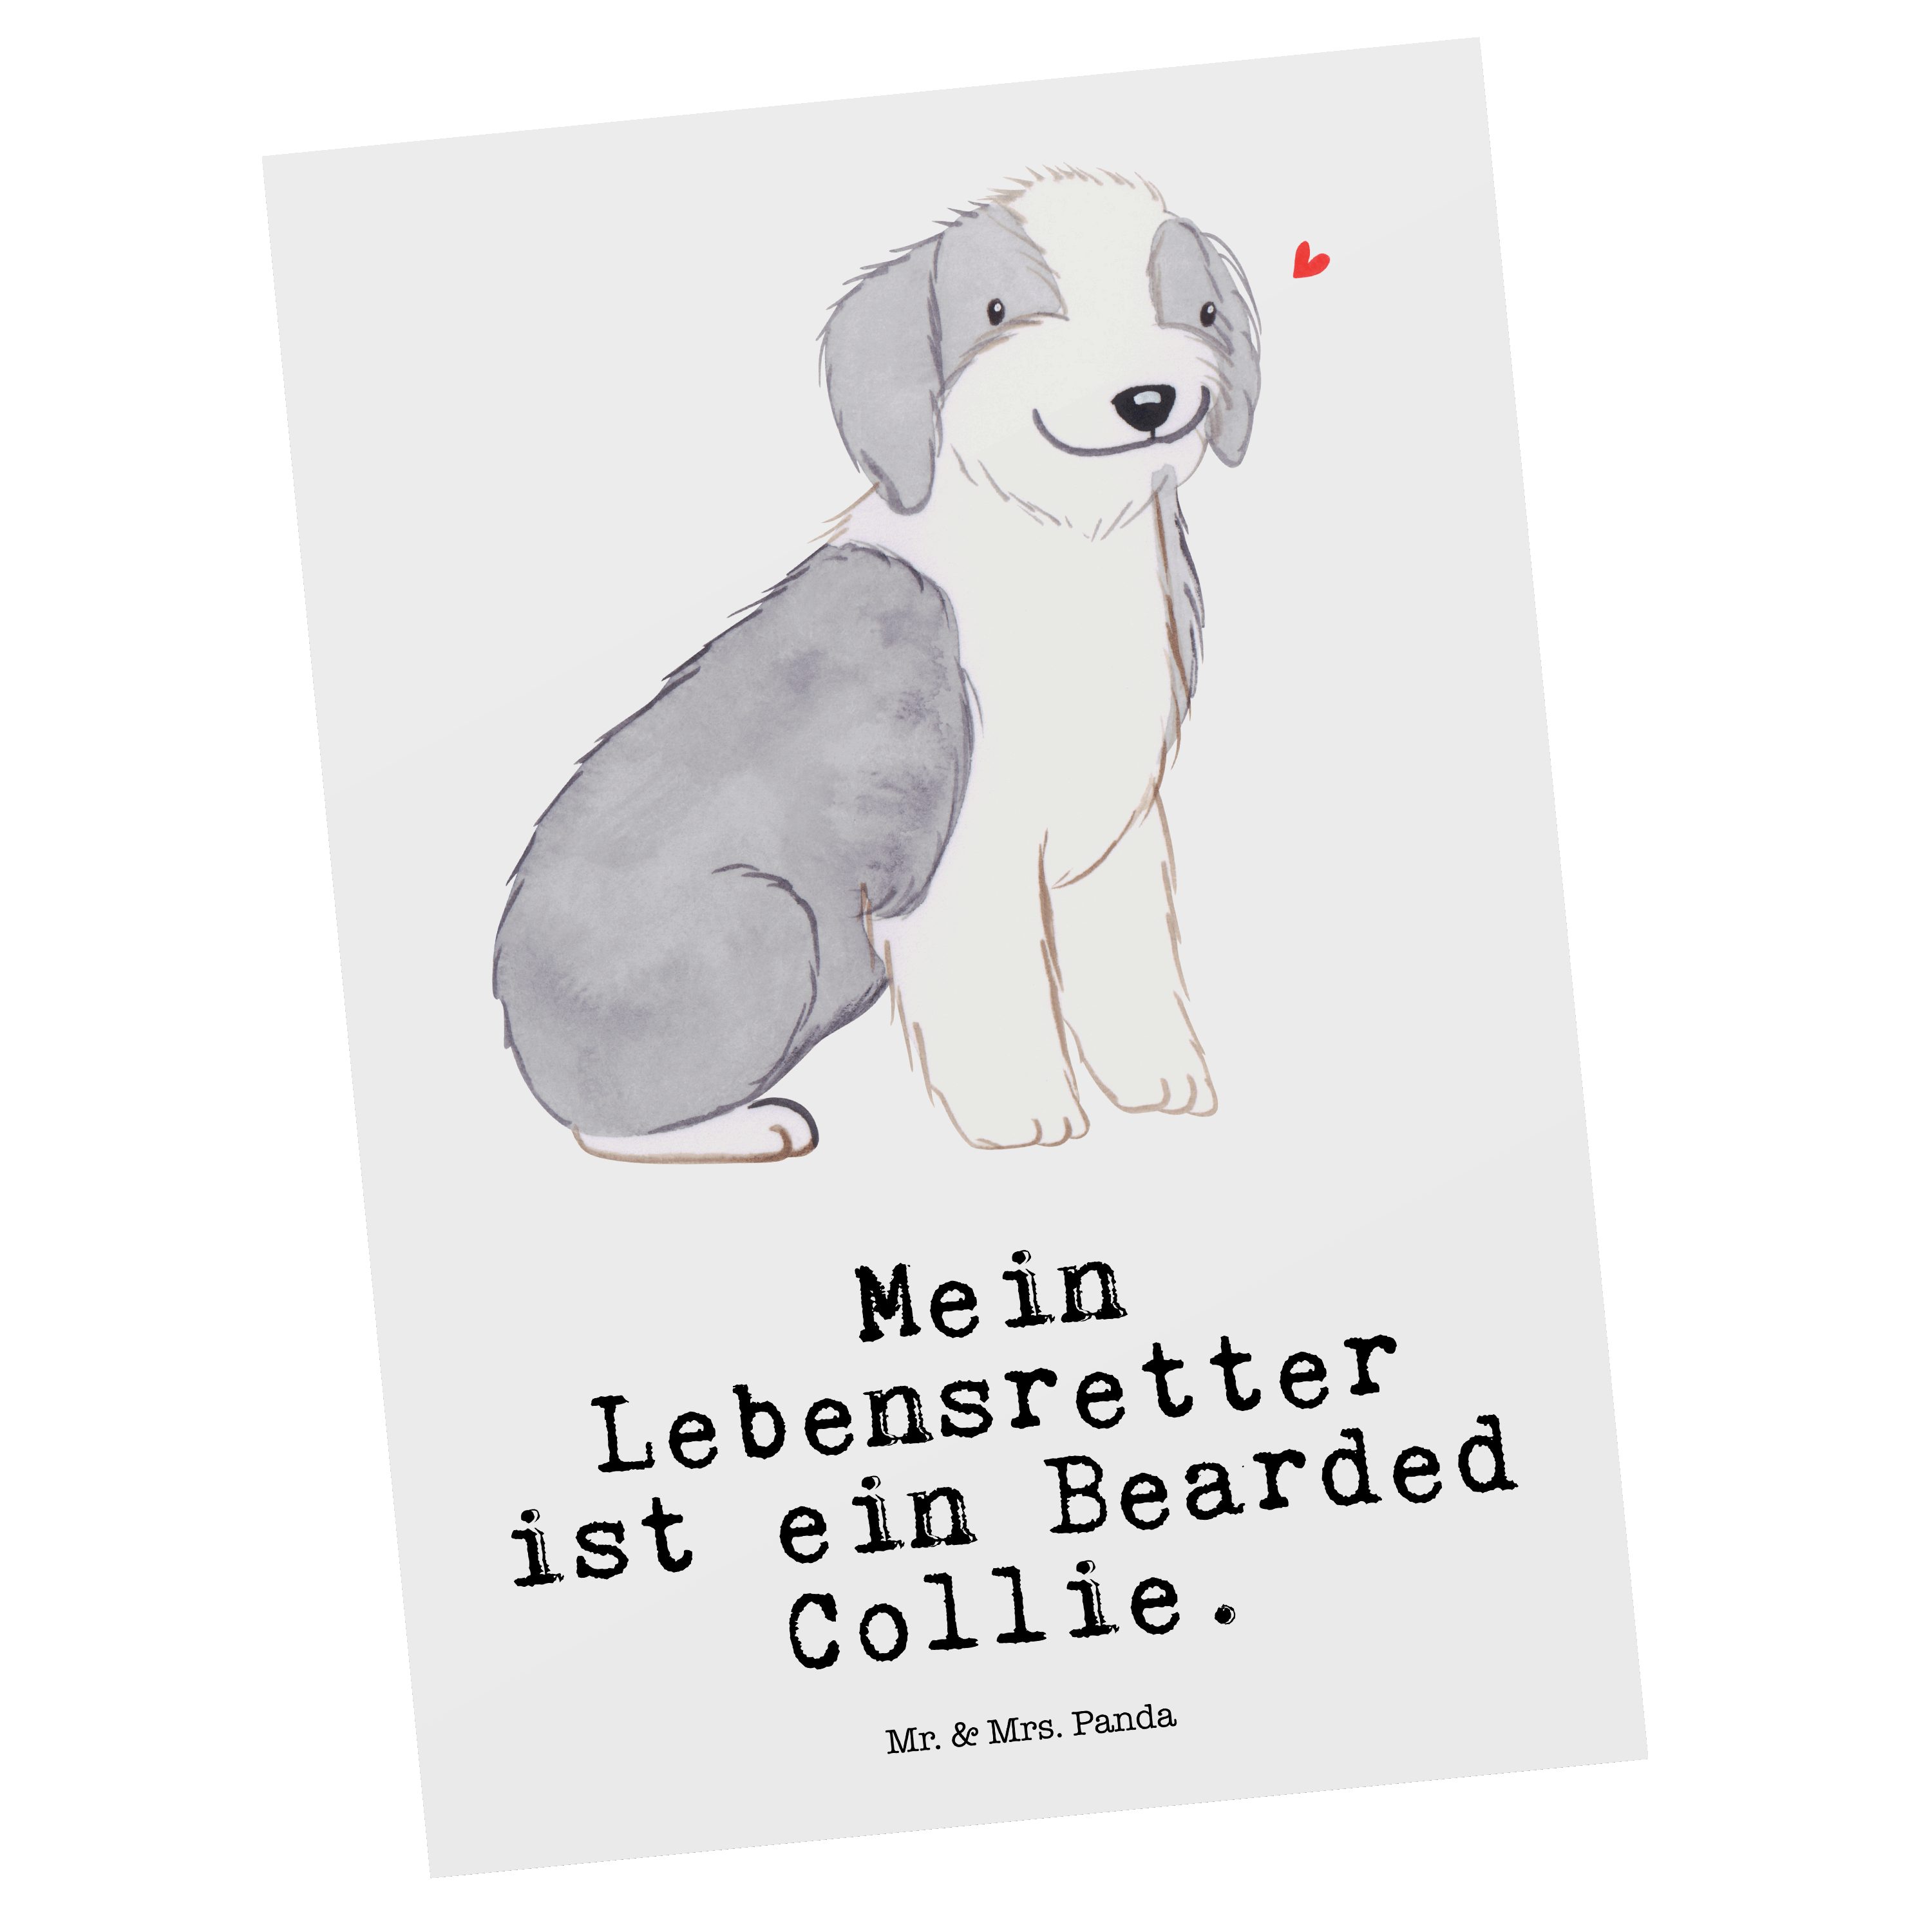 Mr. & Mrs. Panda Postkarte Bearded Collie Lebensretter - Weiß - Geschenk, Grußkarte, Geburtstags